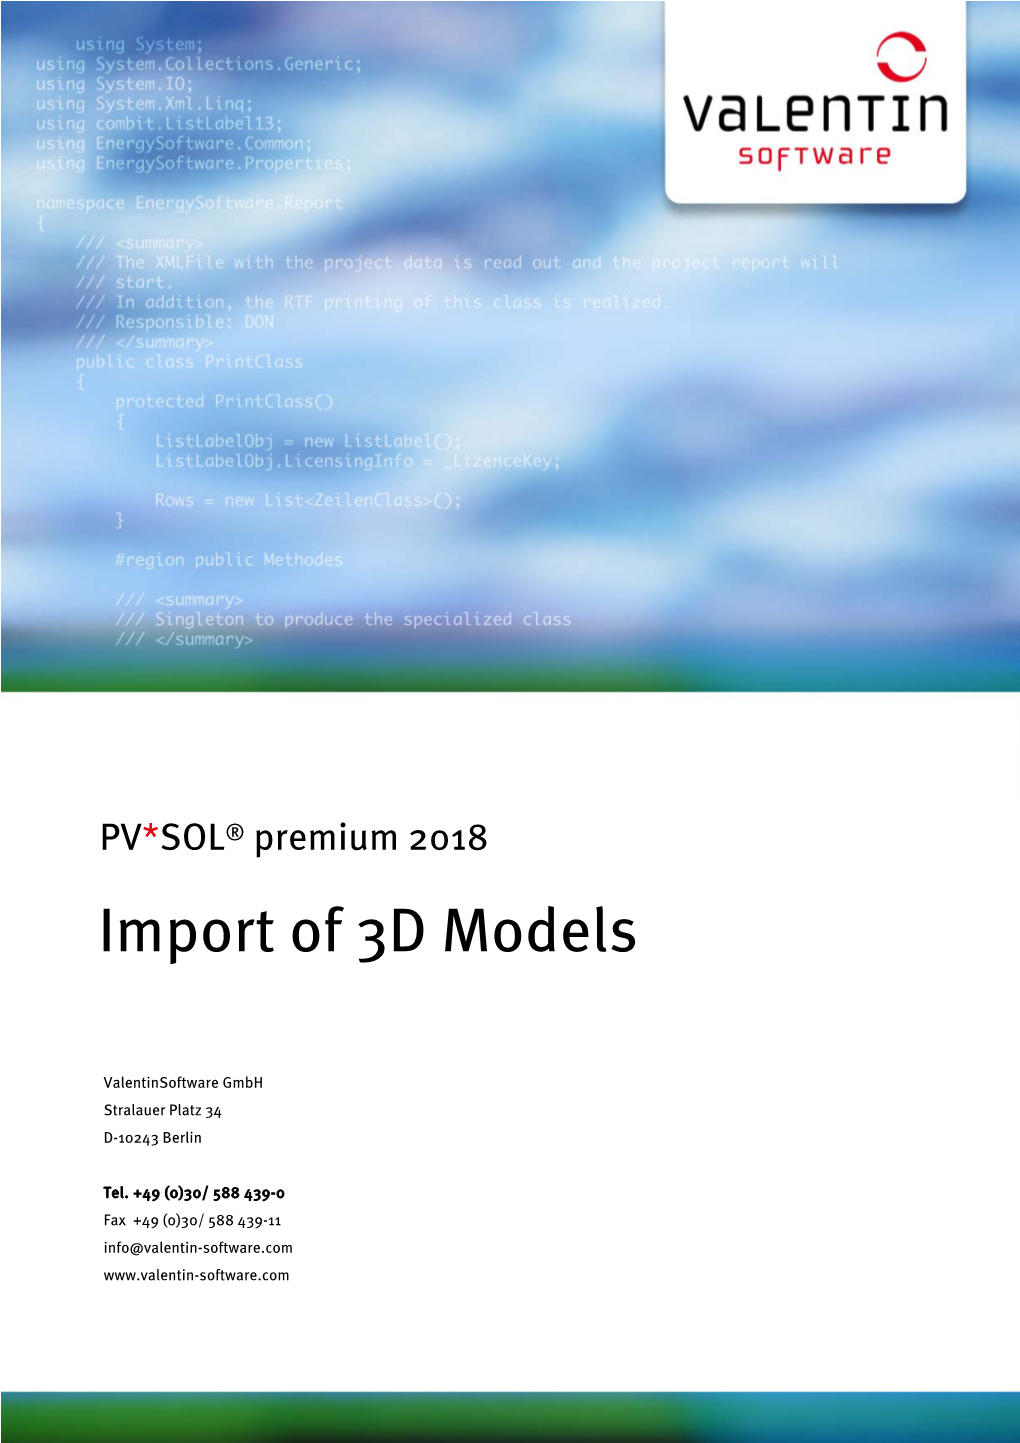 PV*SOL® Premium 2018 Import of 3D Models